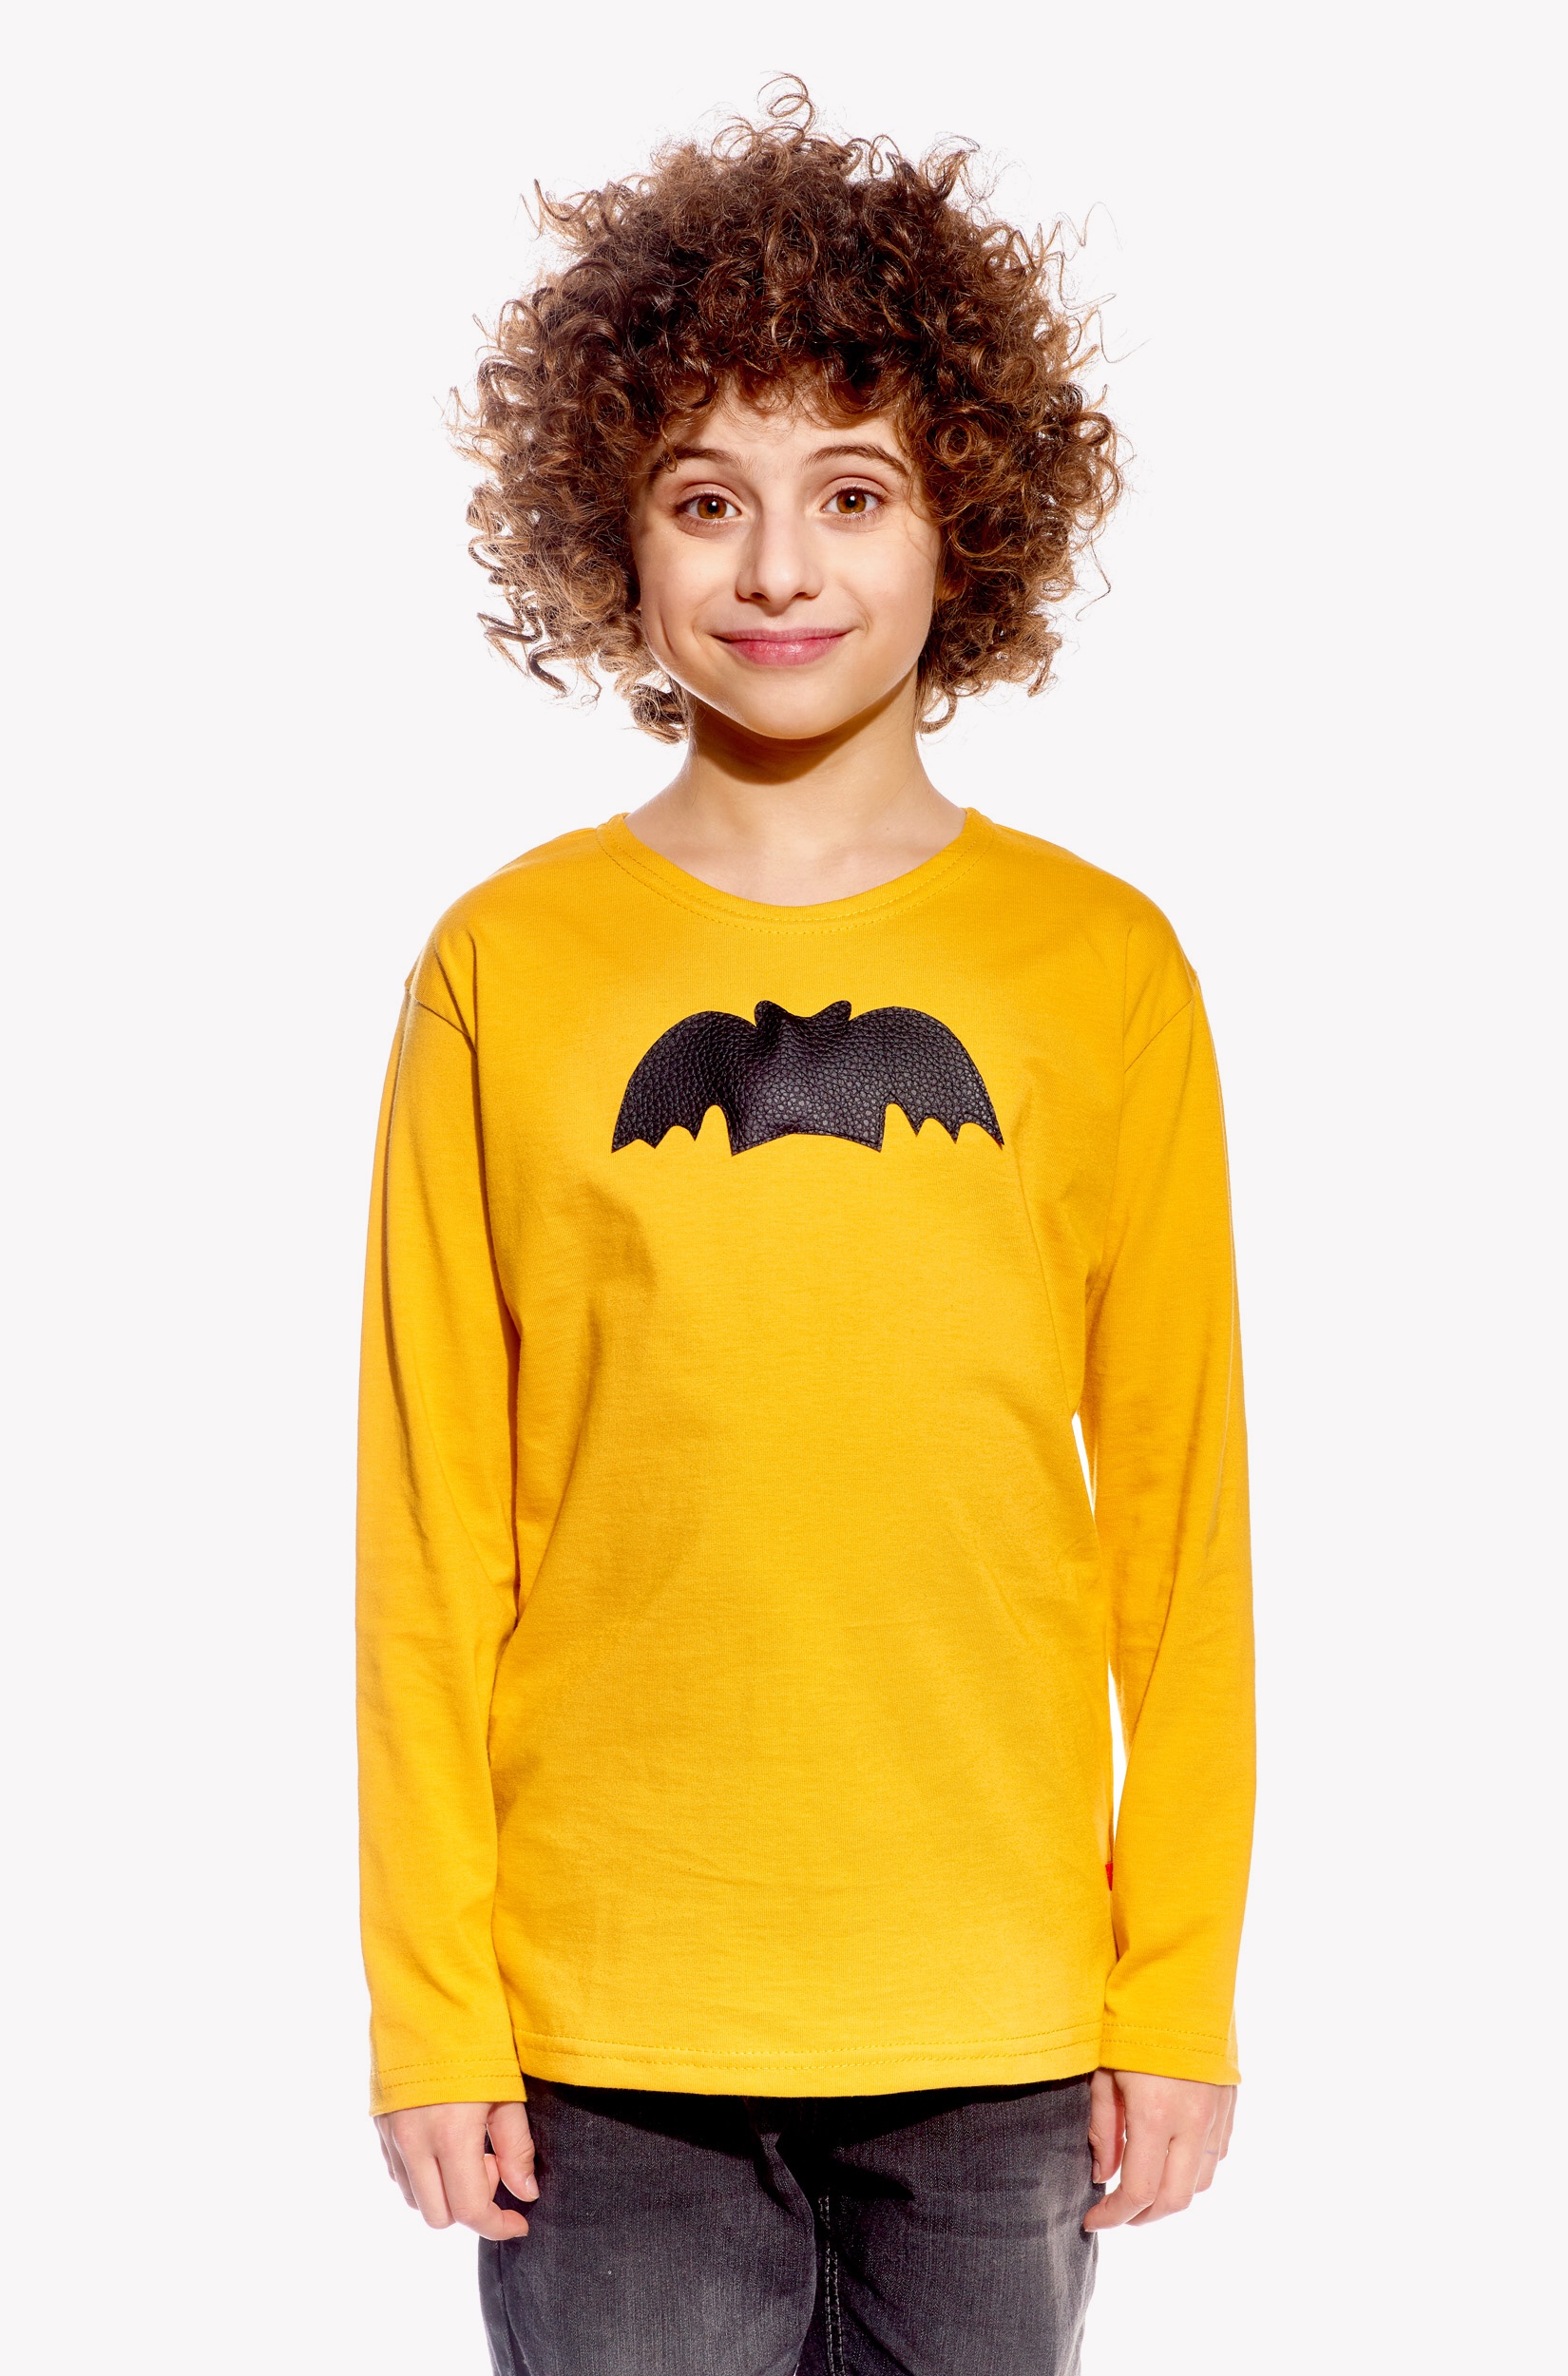 Shirt with a bat